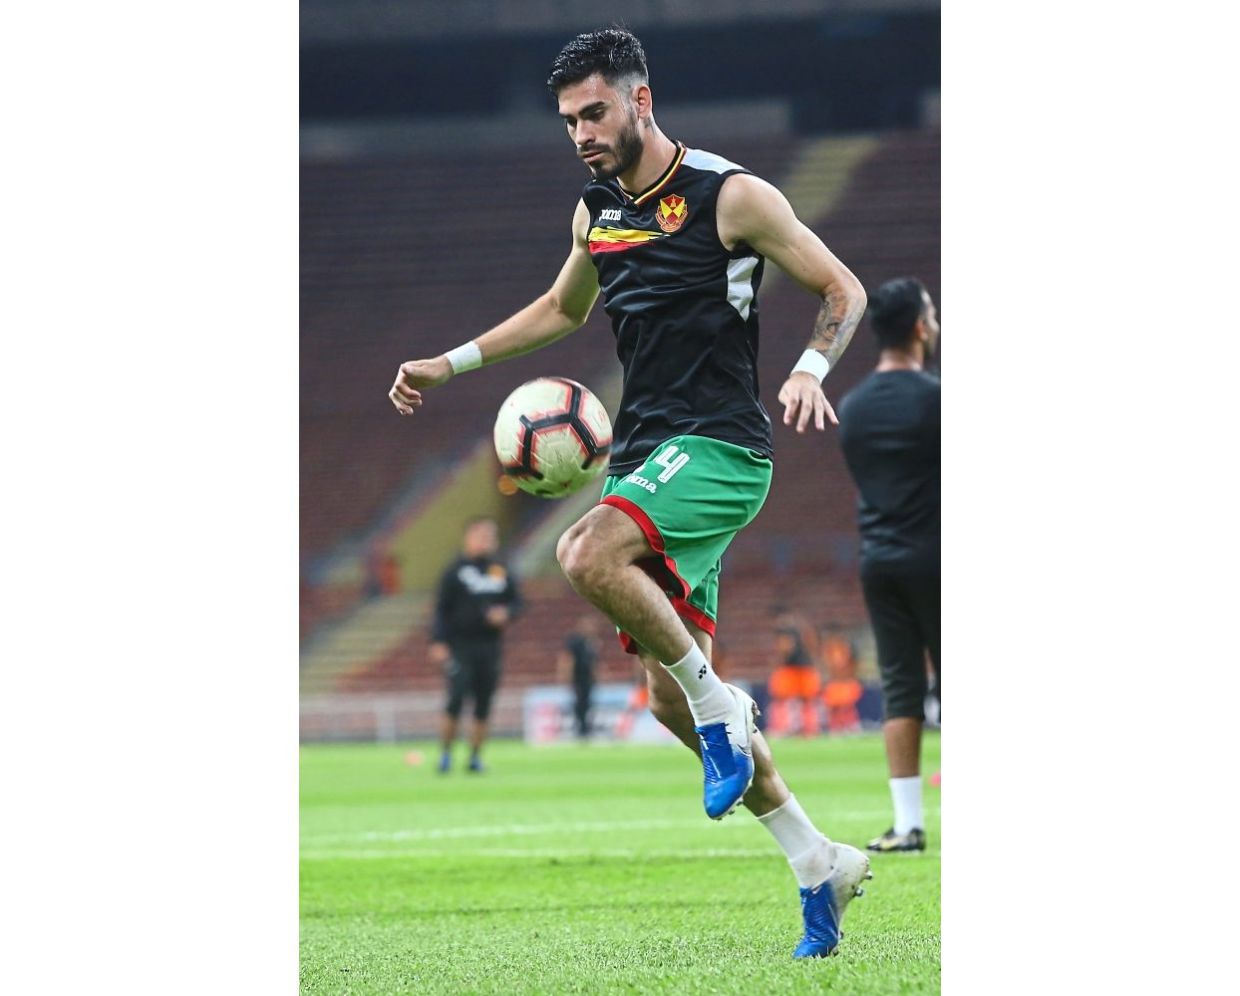 Don’t pant, Panthers – captain Santos has a plan to raise Penang up